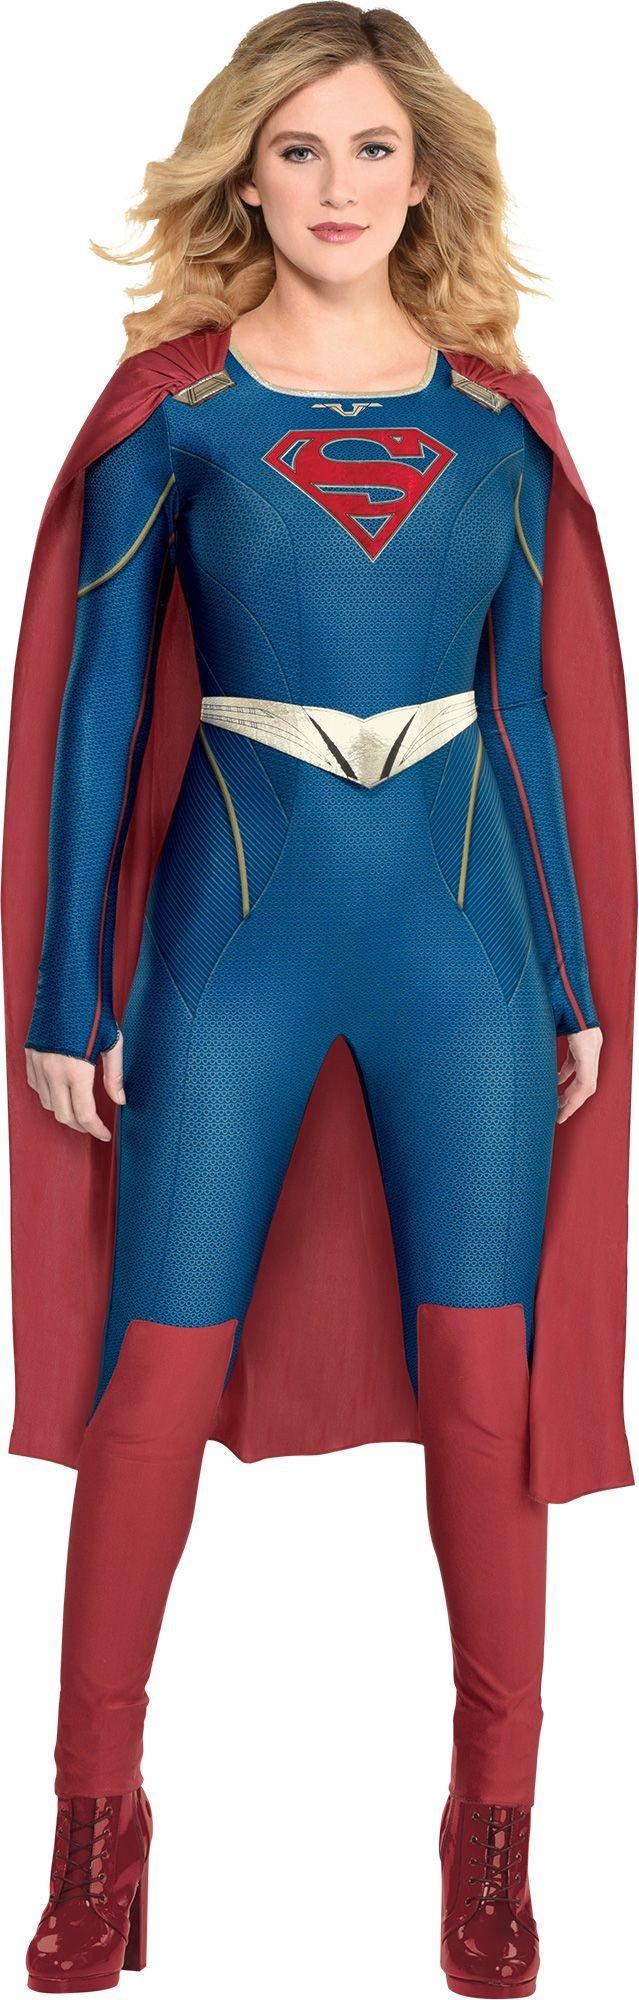 Superwoman costumes